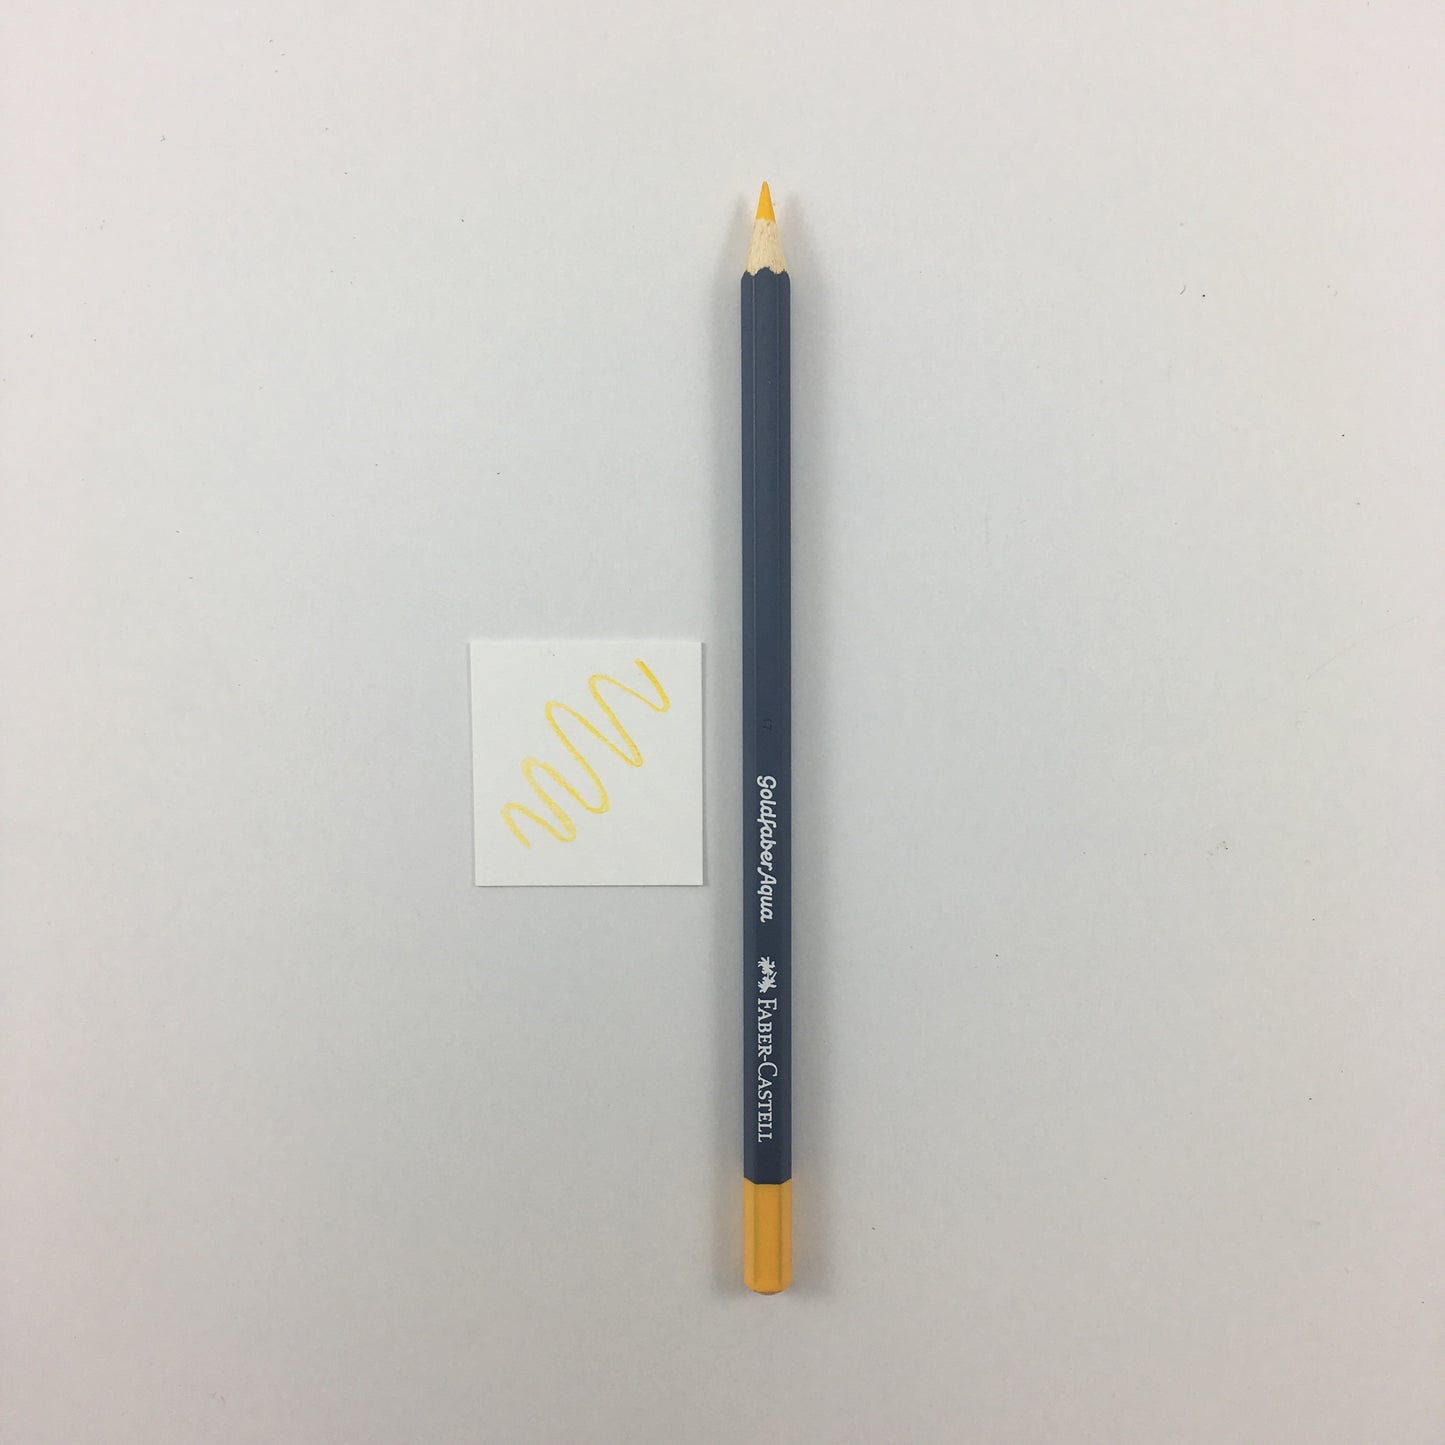 Faber-Castell Goldfaber Aqua Watercolor Pencils - Individuals - 109 - Dark Chrome Yellow by Faber-Castell - K. A. Artist Shop